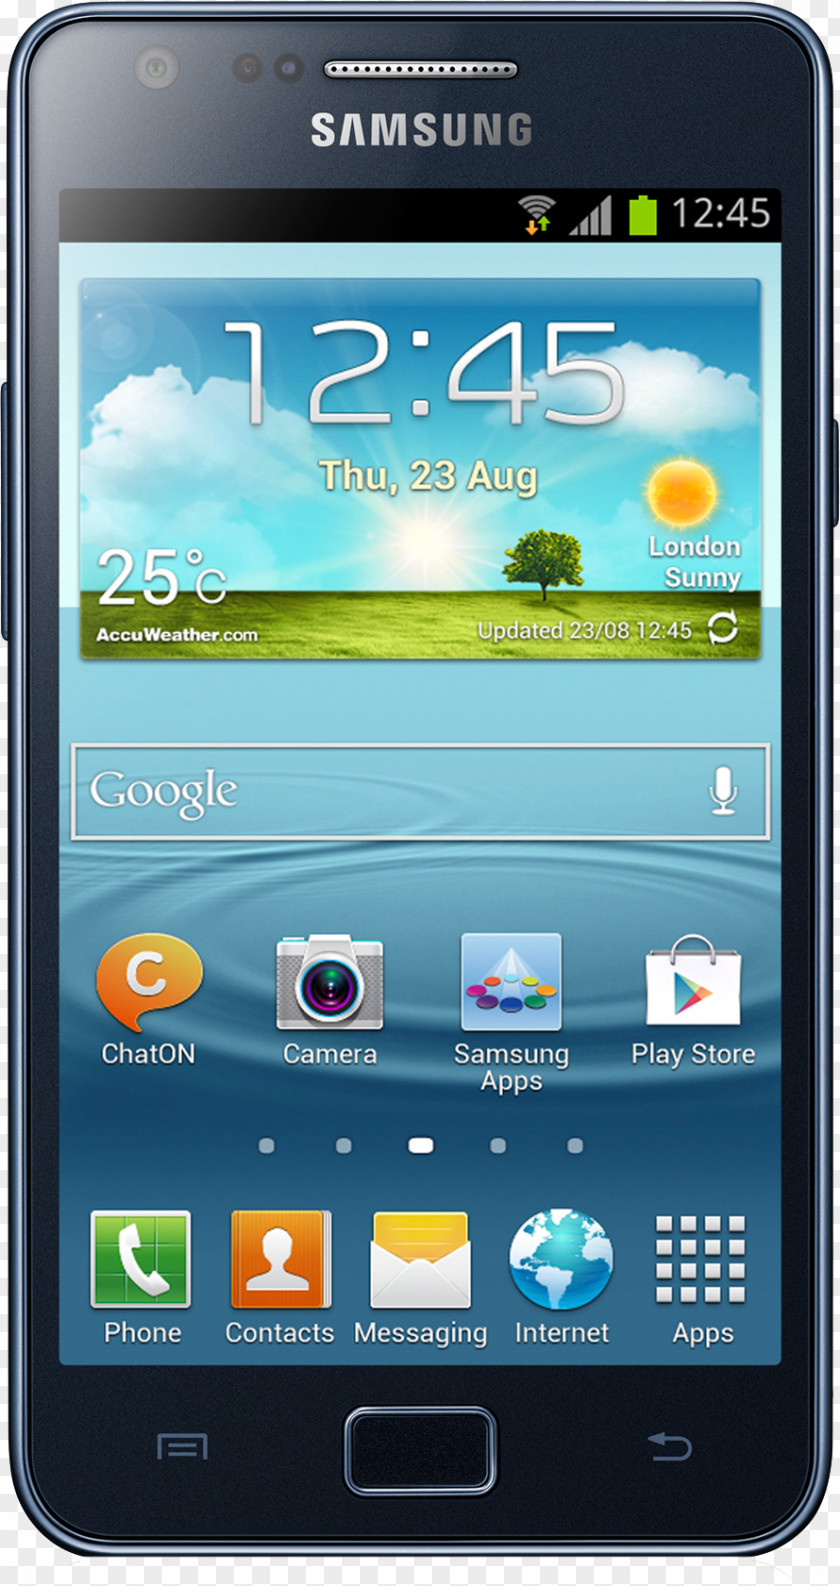 Samsung Galaxy Win Grand Note 3 S III Mini PNG